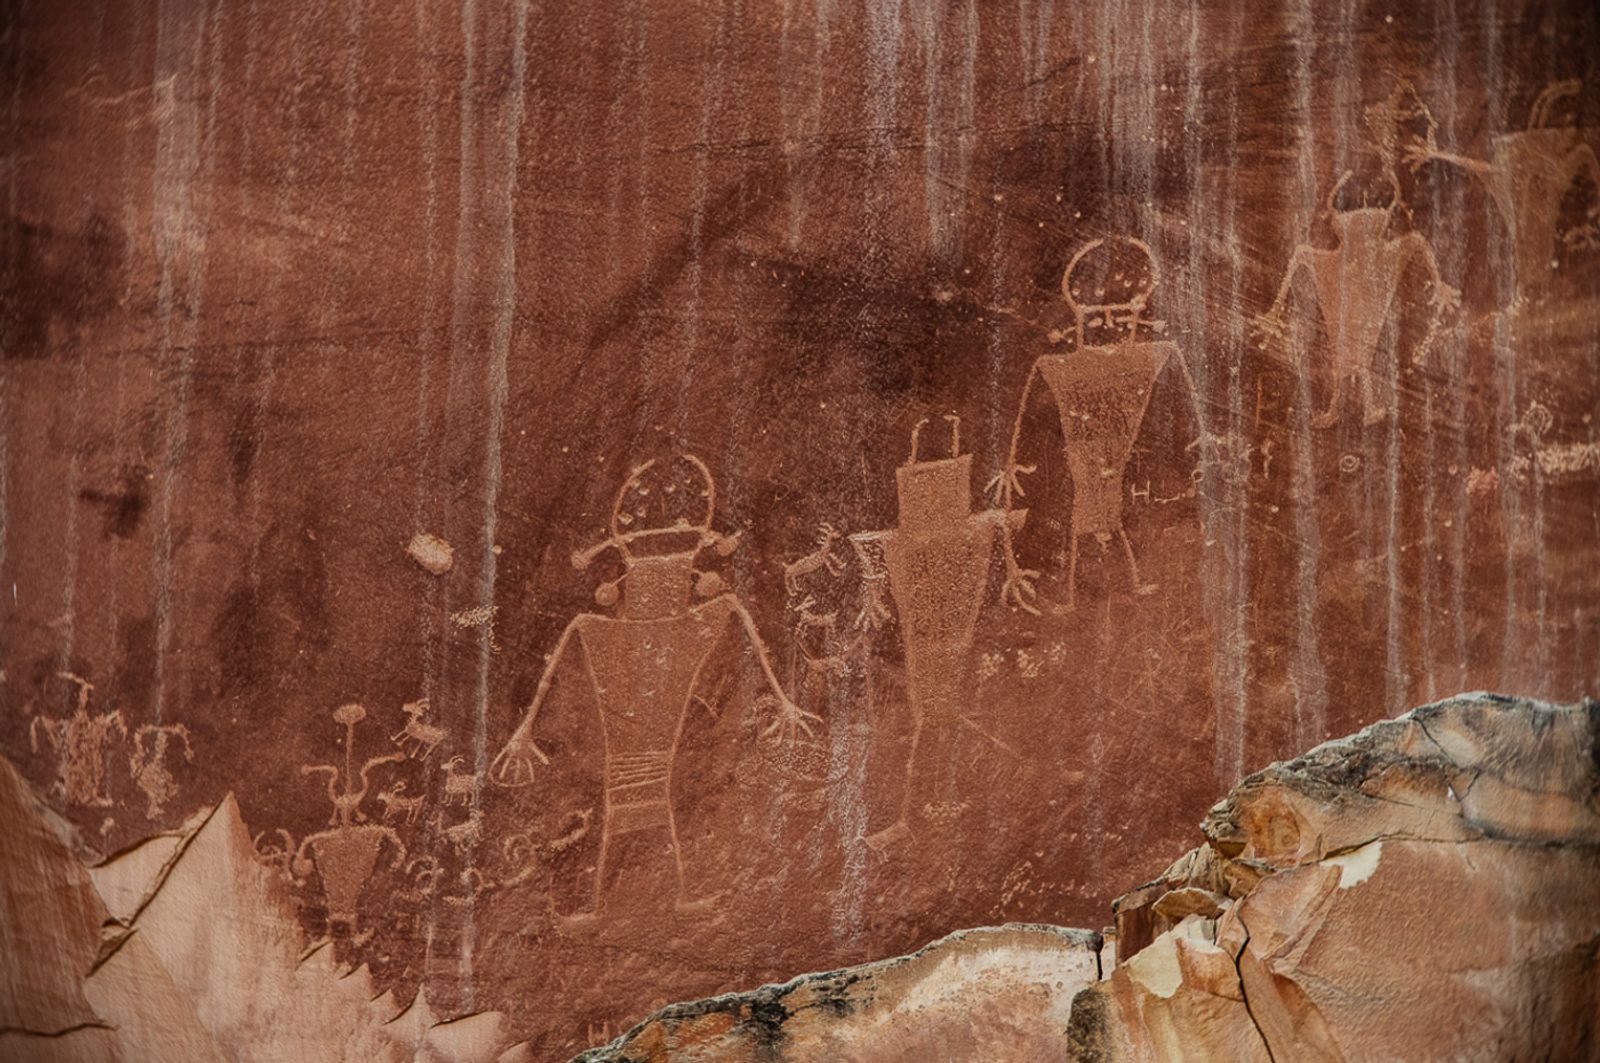 © Matjaz Tancic - 2000BCE petroglyphs in Horseshoe Canyon, Utah.